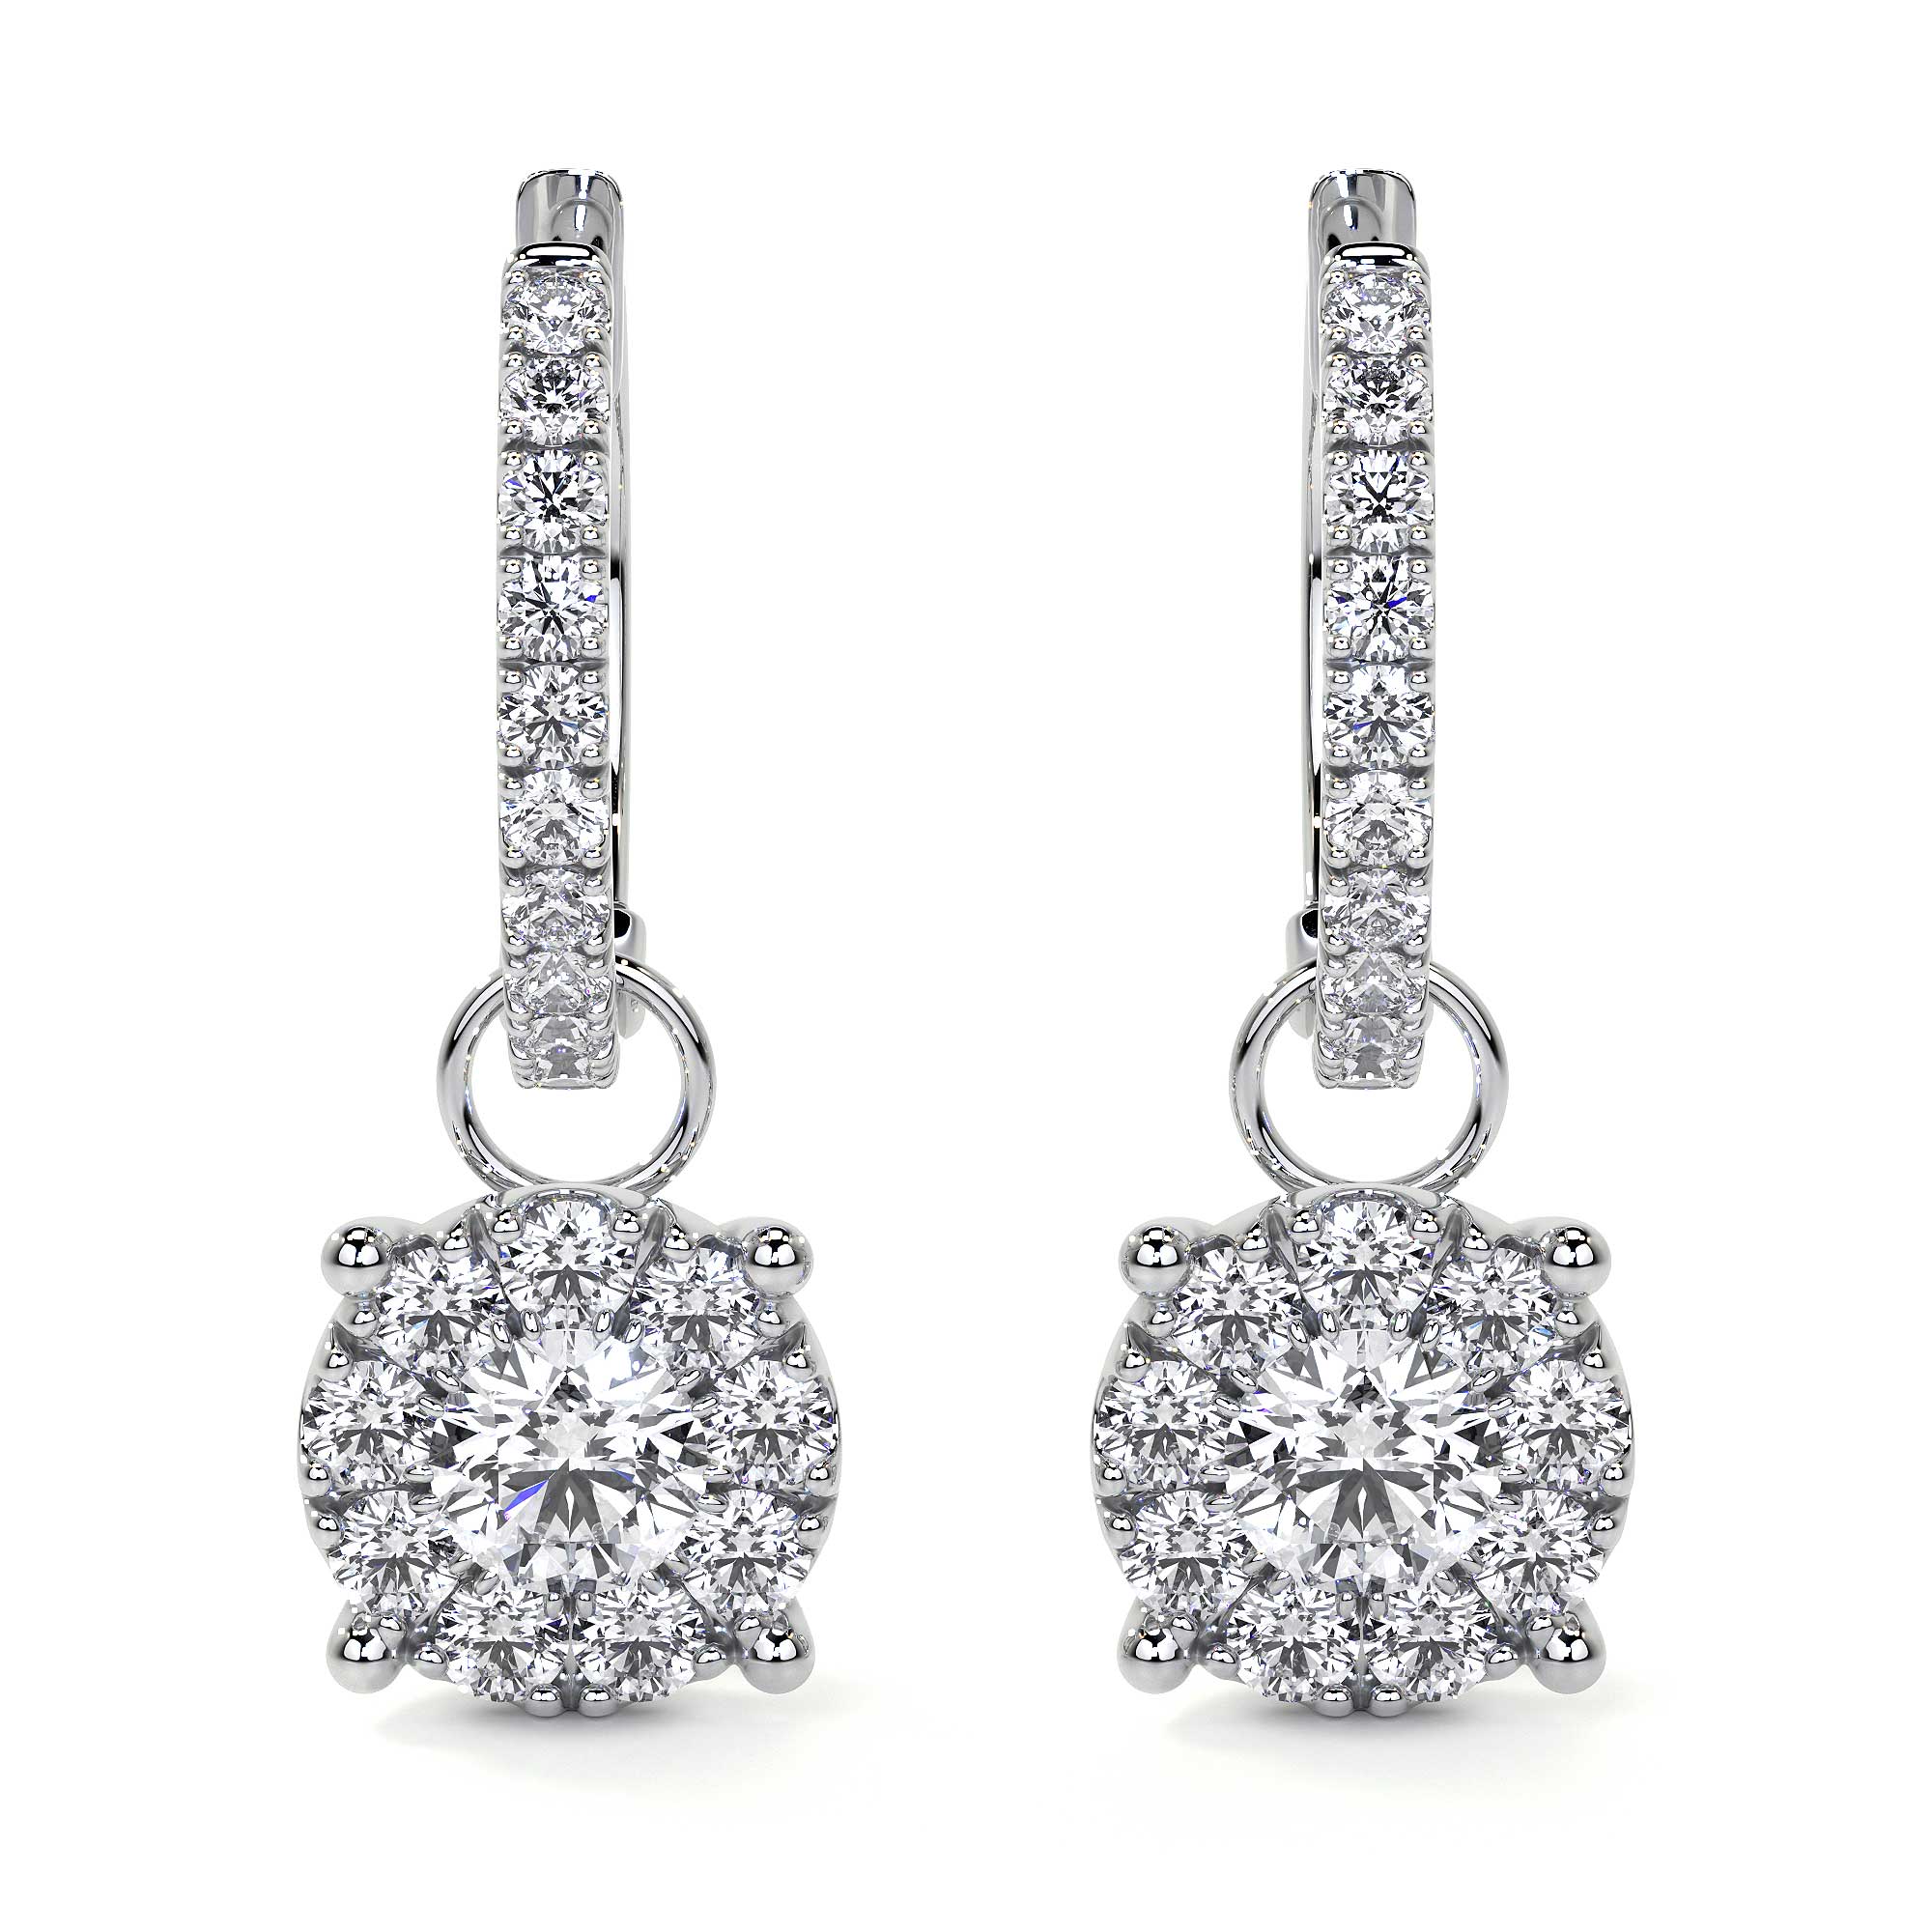 Best Diamond Jewelry Gifts Under $5K - Leviev Diamonds